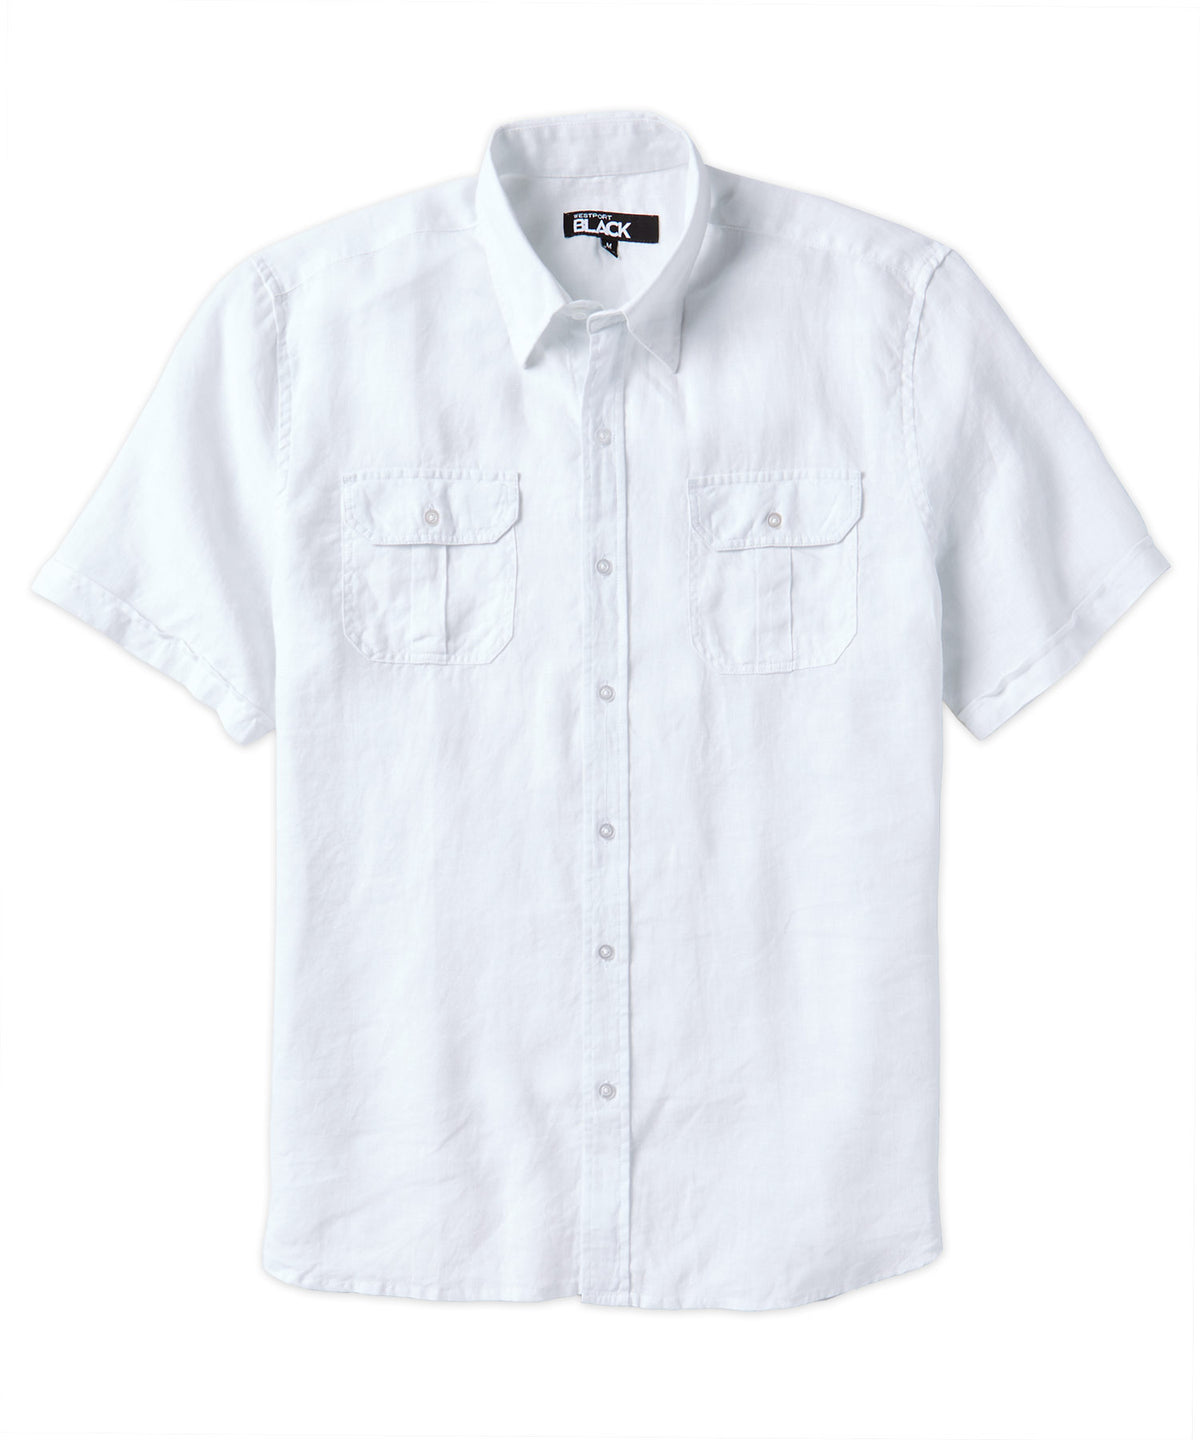 Westport Black Short Sleeve Linen Safari Shirt, Men's Big & Tall